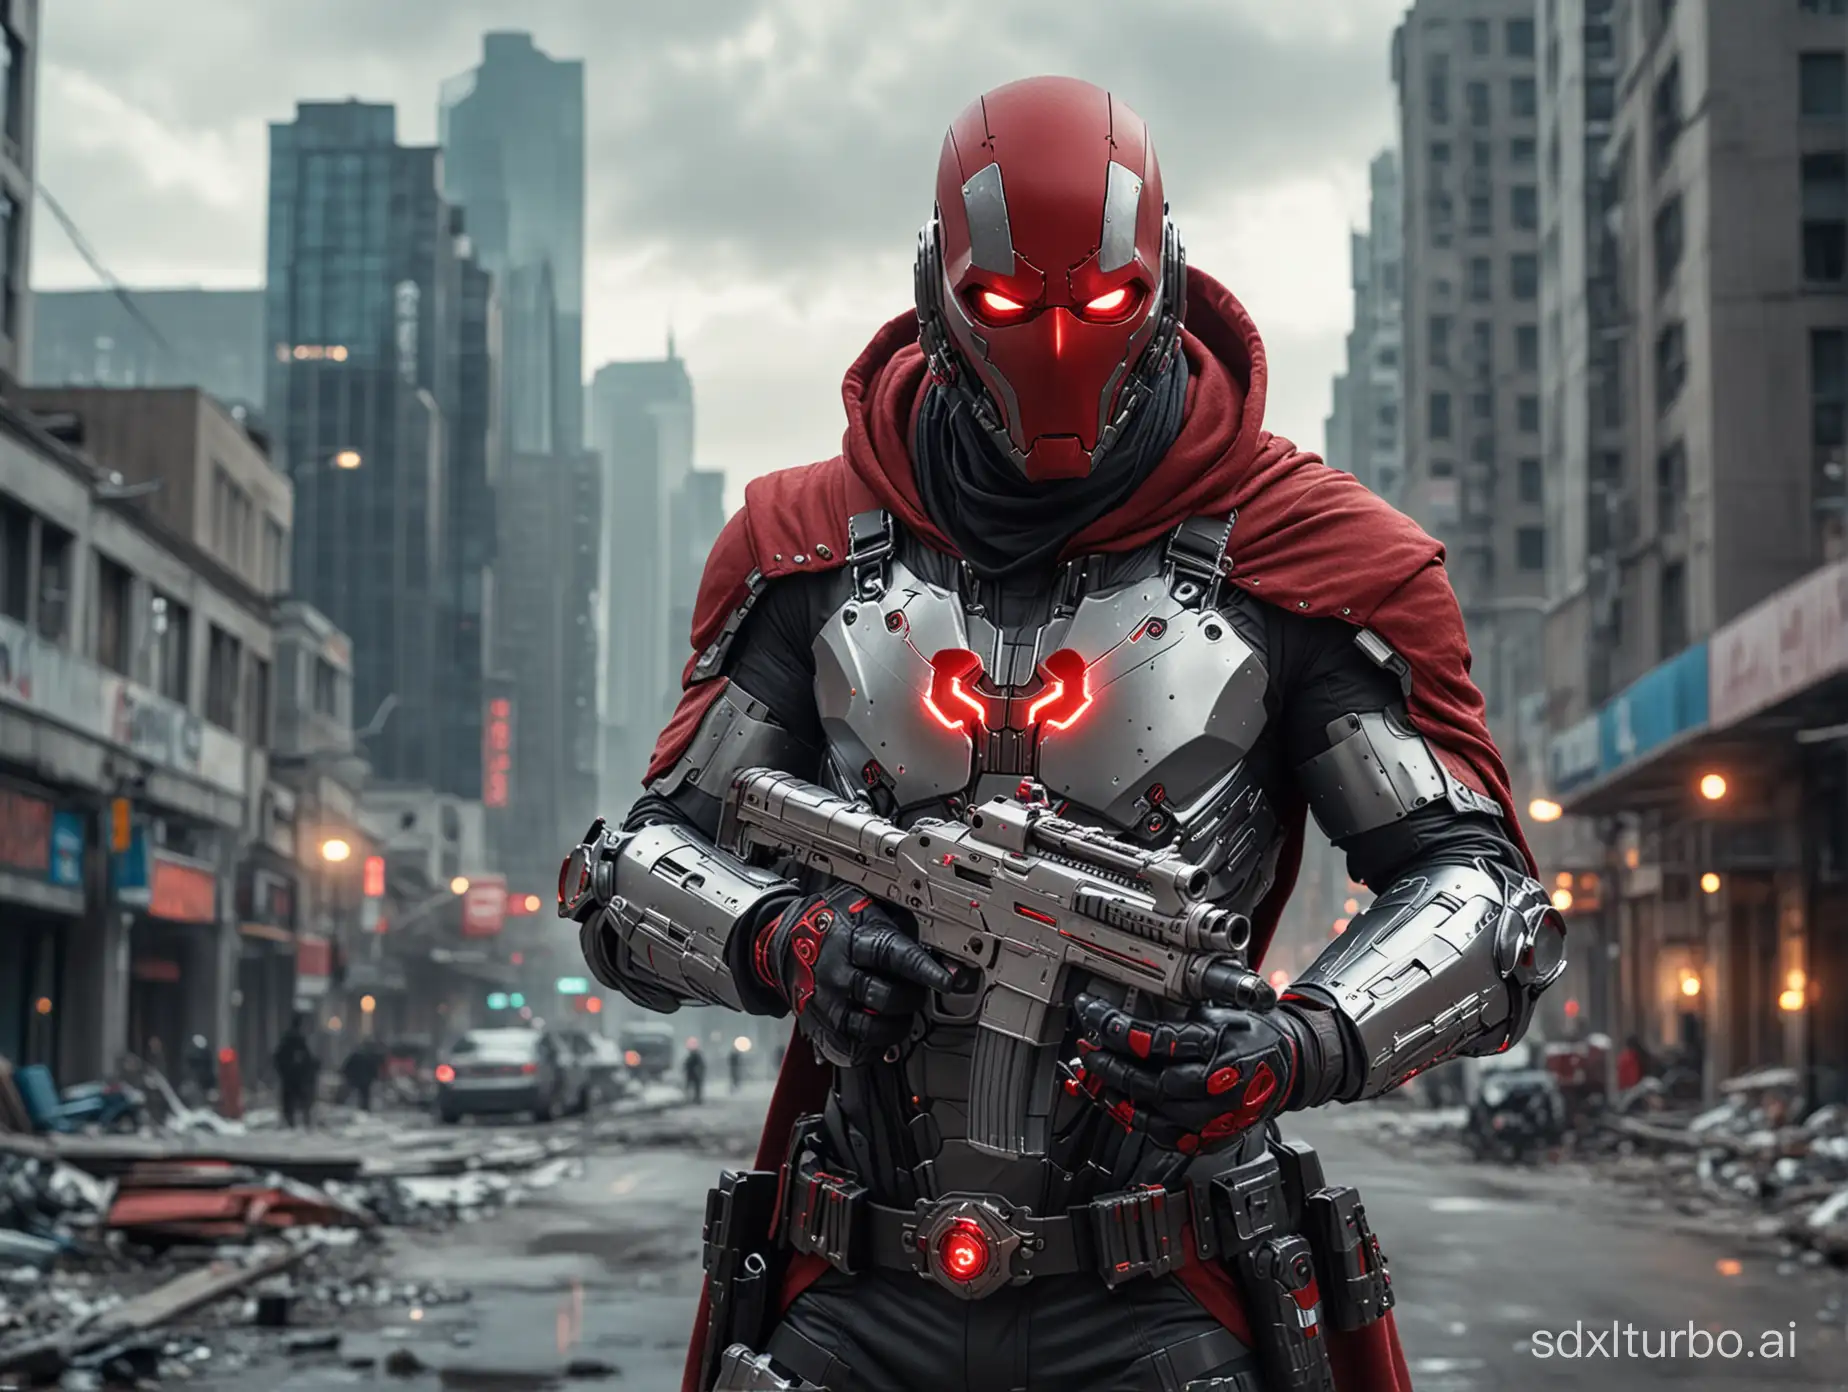 Futuristic-Cyborg-Warrior-in-Silver-and-Red-Amidst-Urban-Landscape